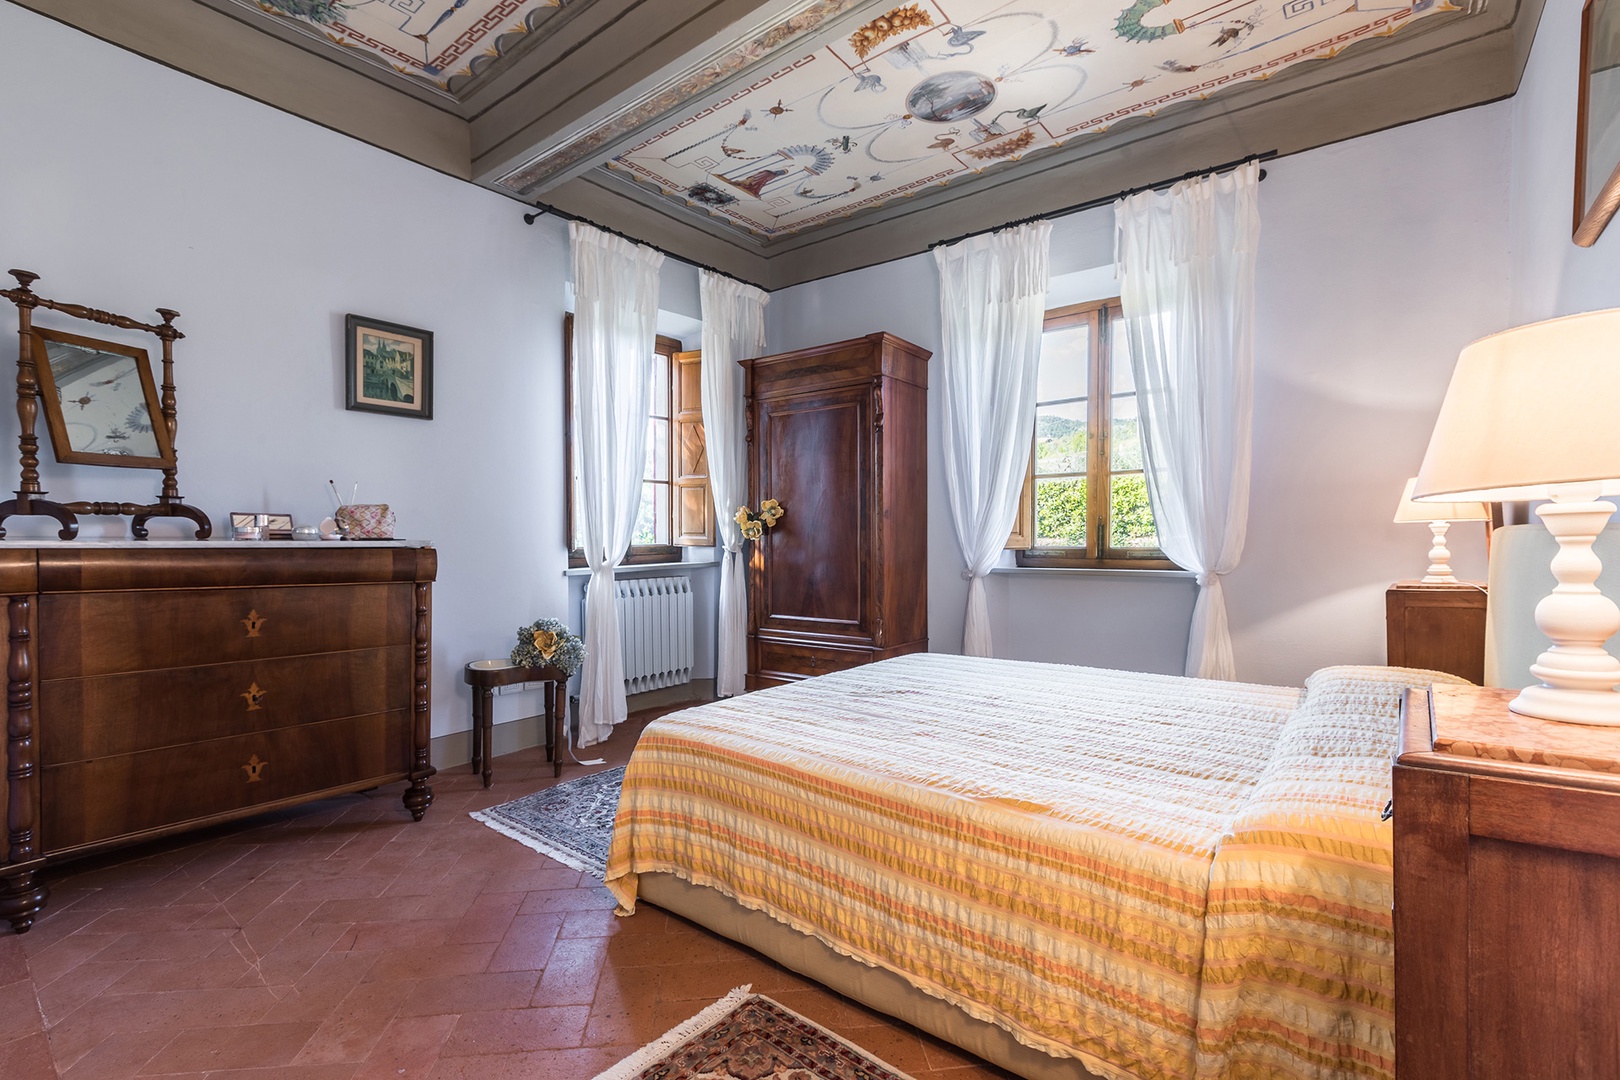 Bedroom 2 on the second floor has a beautiful frescoed ceiling and en suite bathroom.